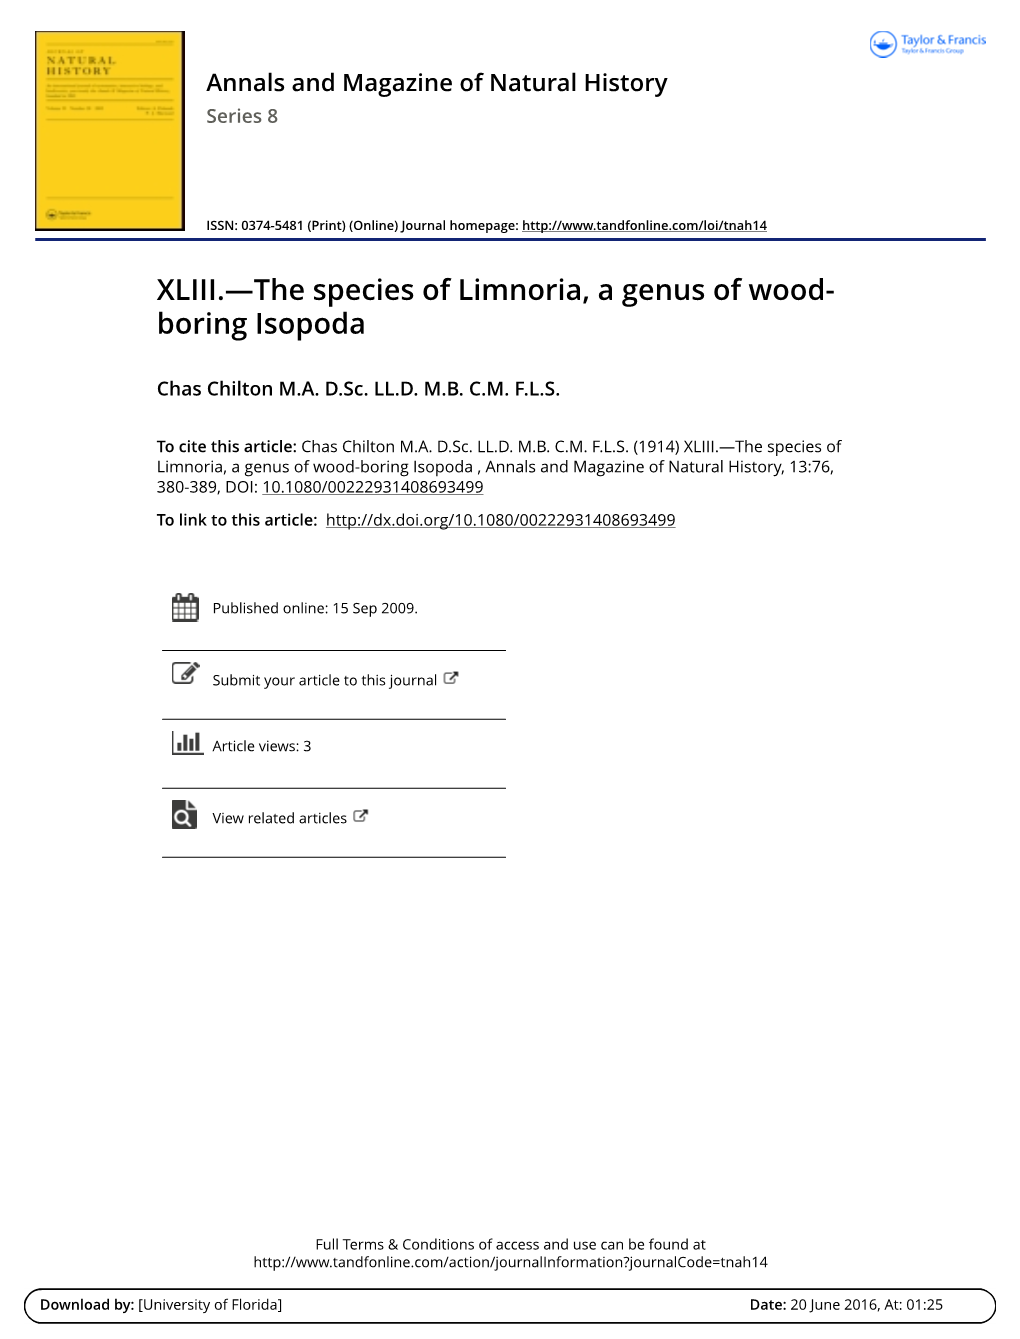 The Species of Limnoria, a Genus of Wood- Boring Isopoda